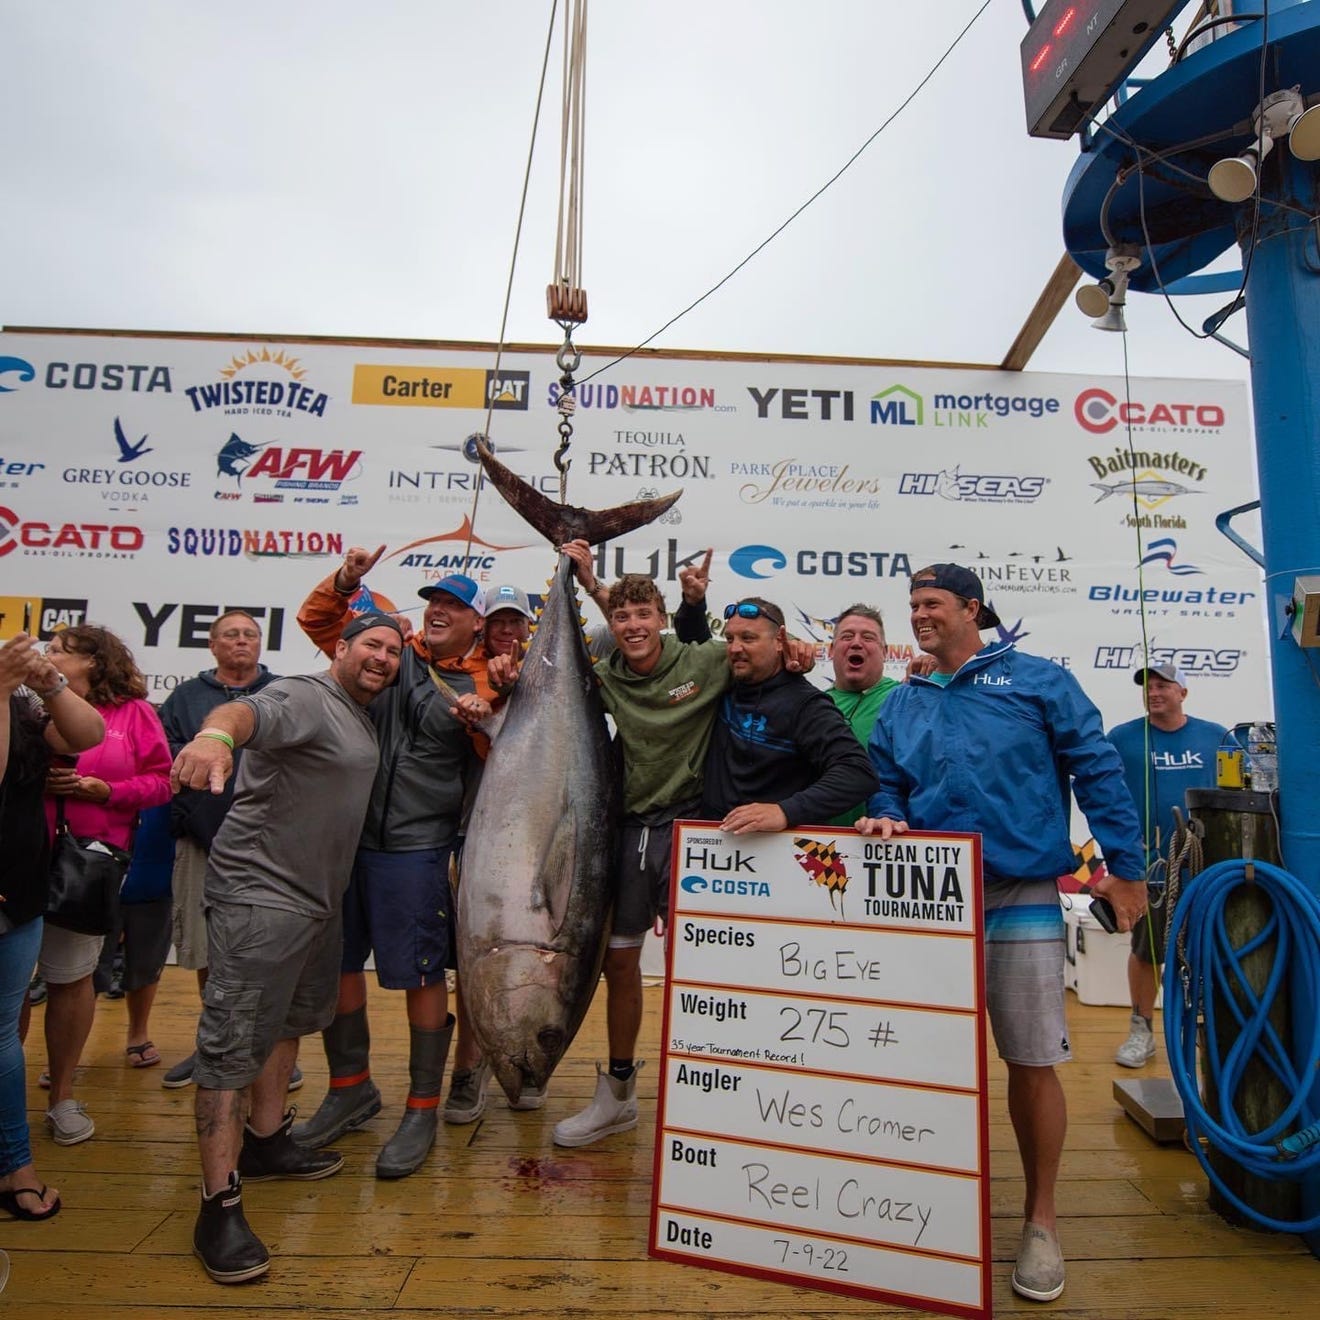 Massive bigeye tuna sets new record at Ocean City Tuna Tournament